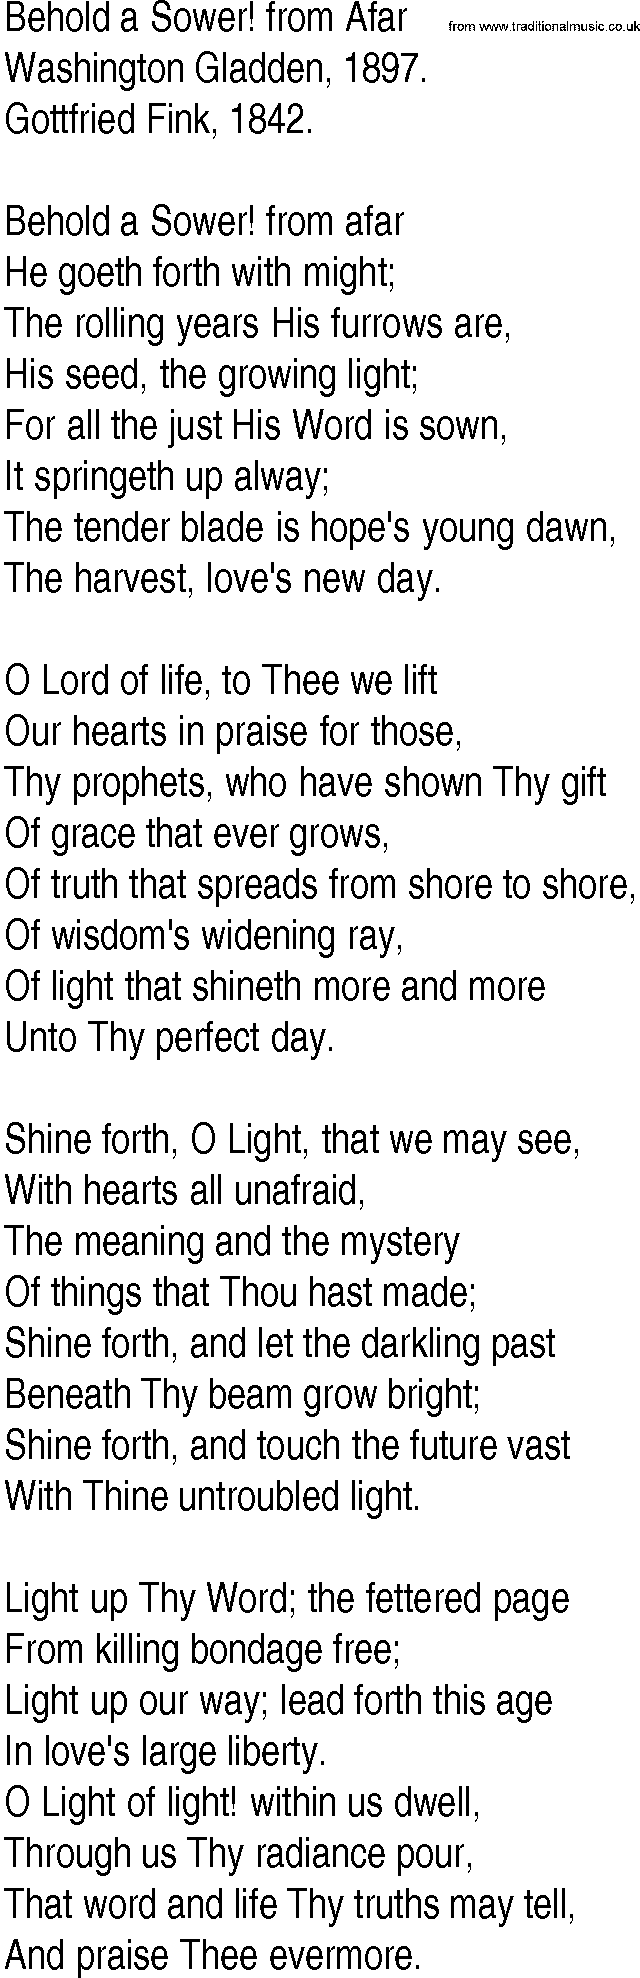 Hymn and Gospel Song: Behold a Sower! from Afar by Washington Gladden lyrics